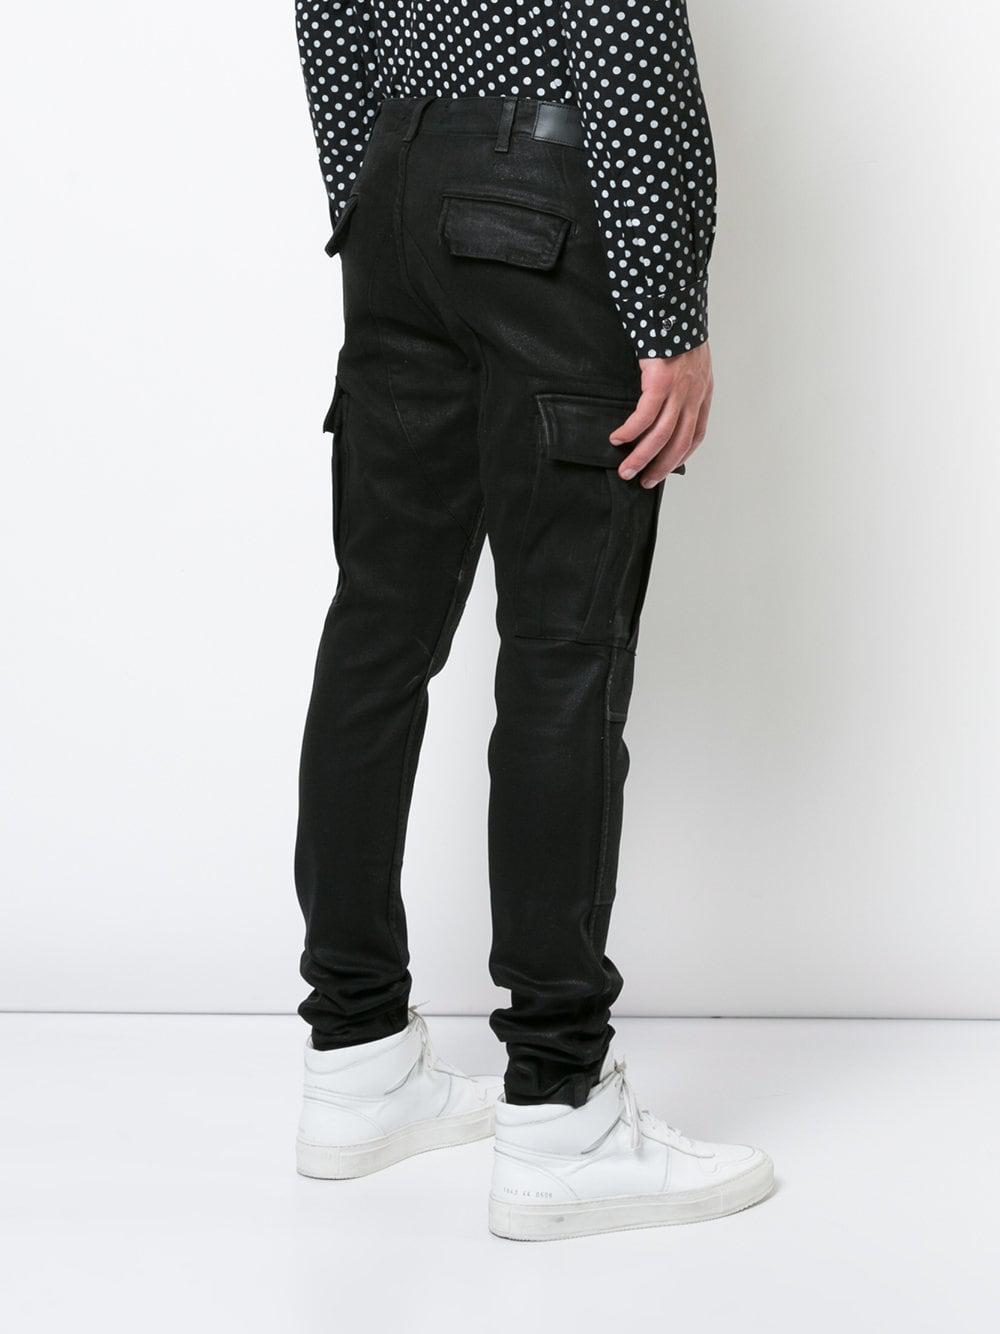 Amiri Cotton Skinny Cargo Trousers in Black for Men - Lyst